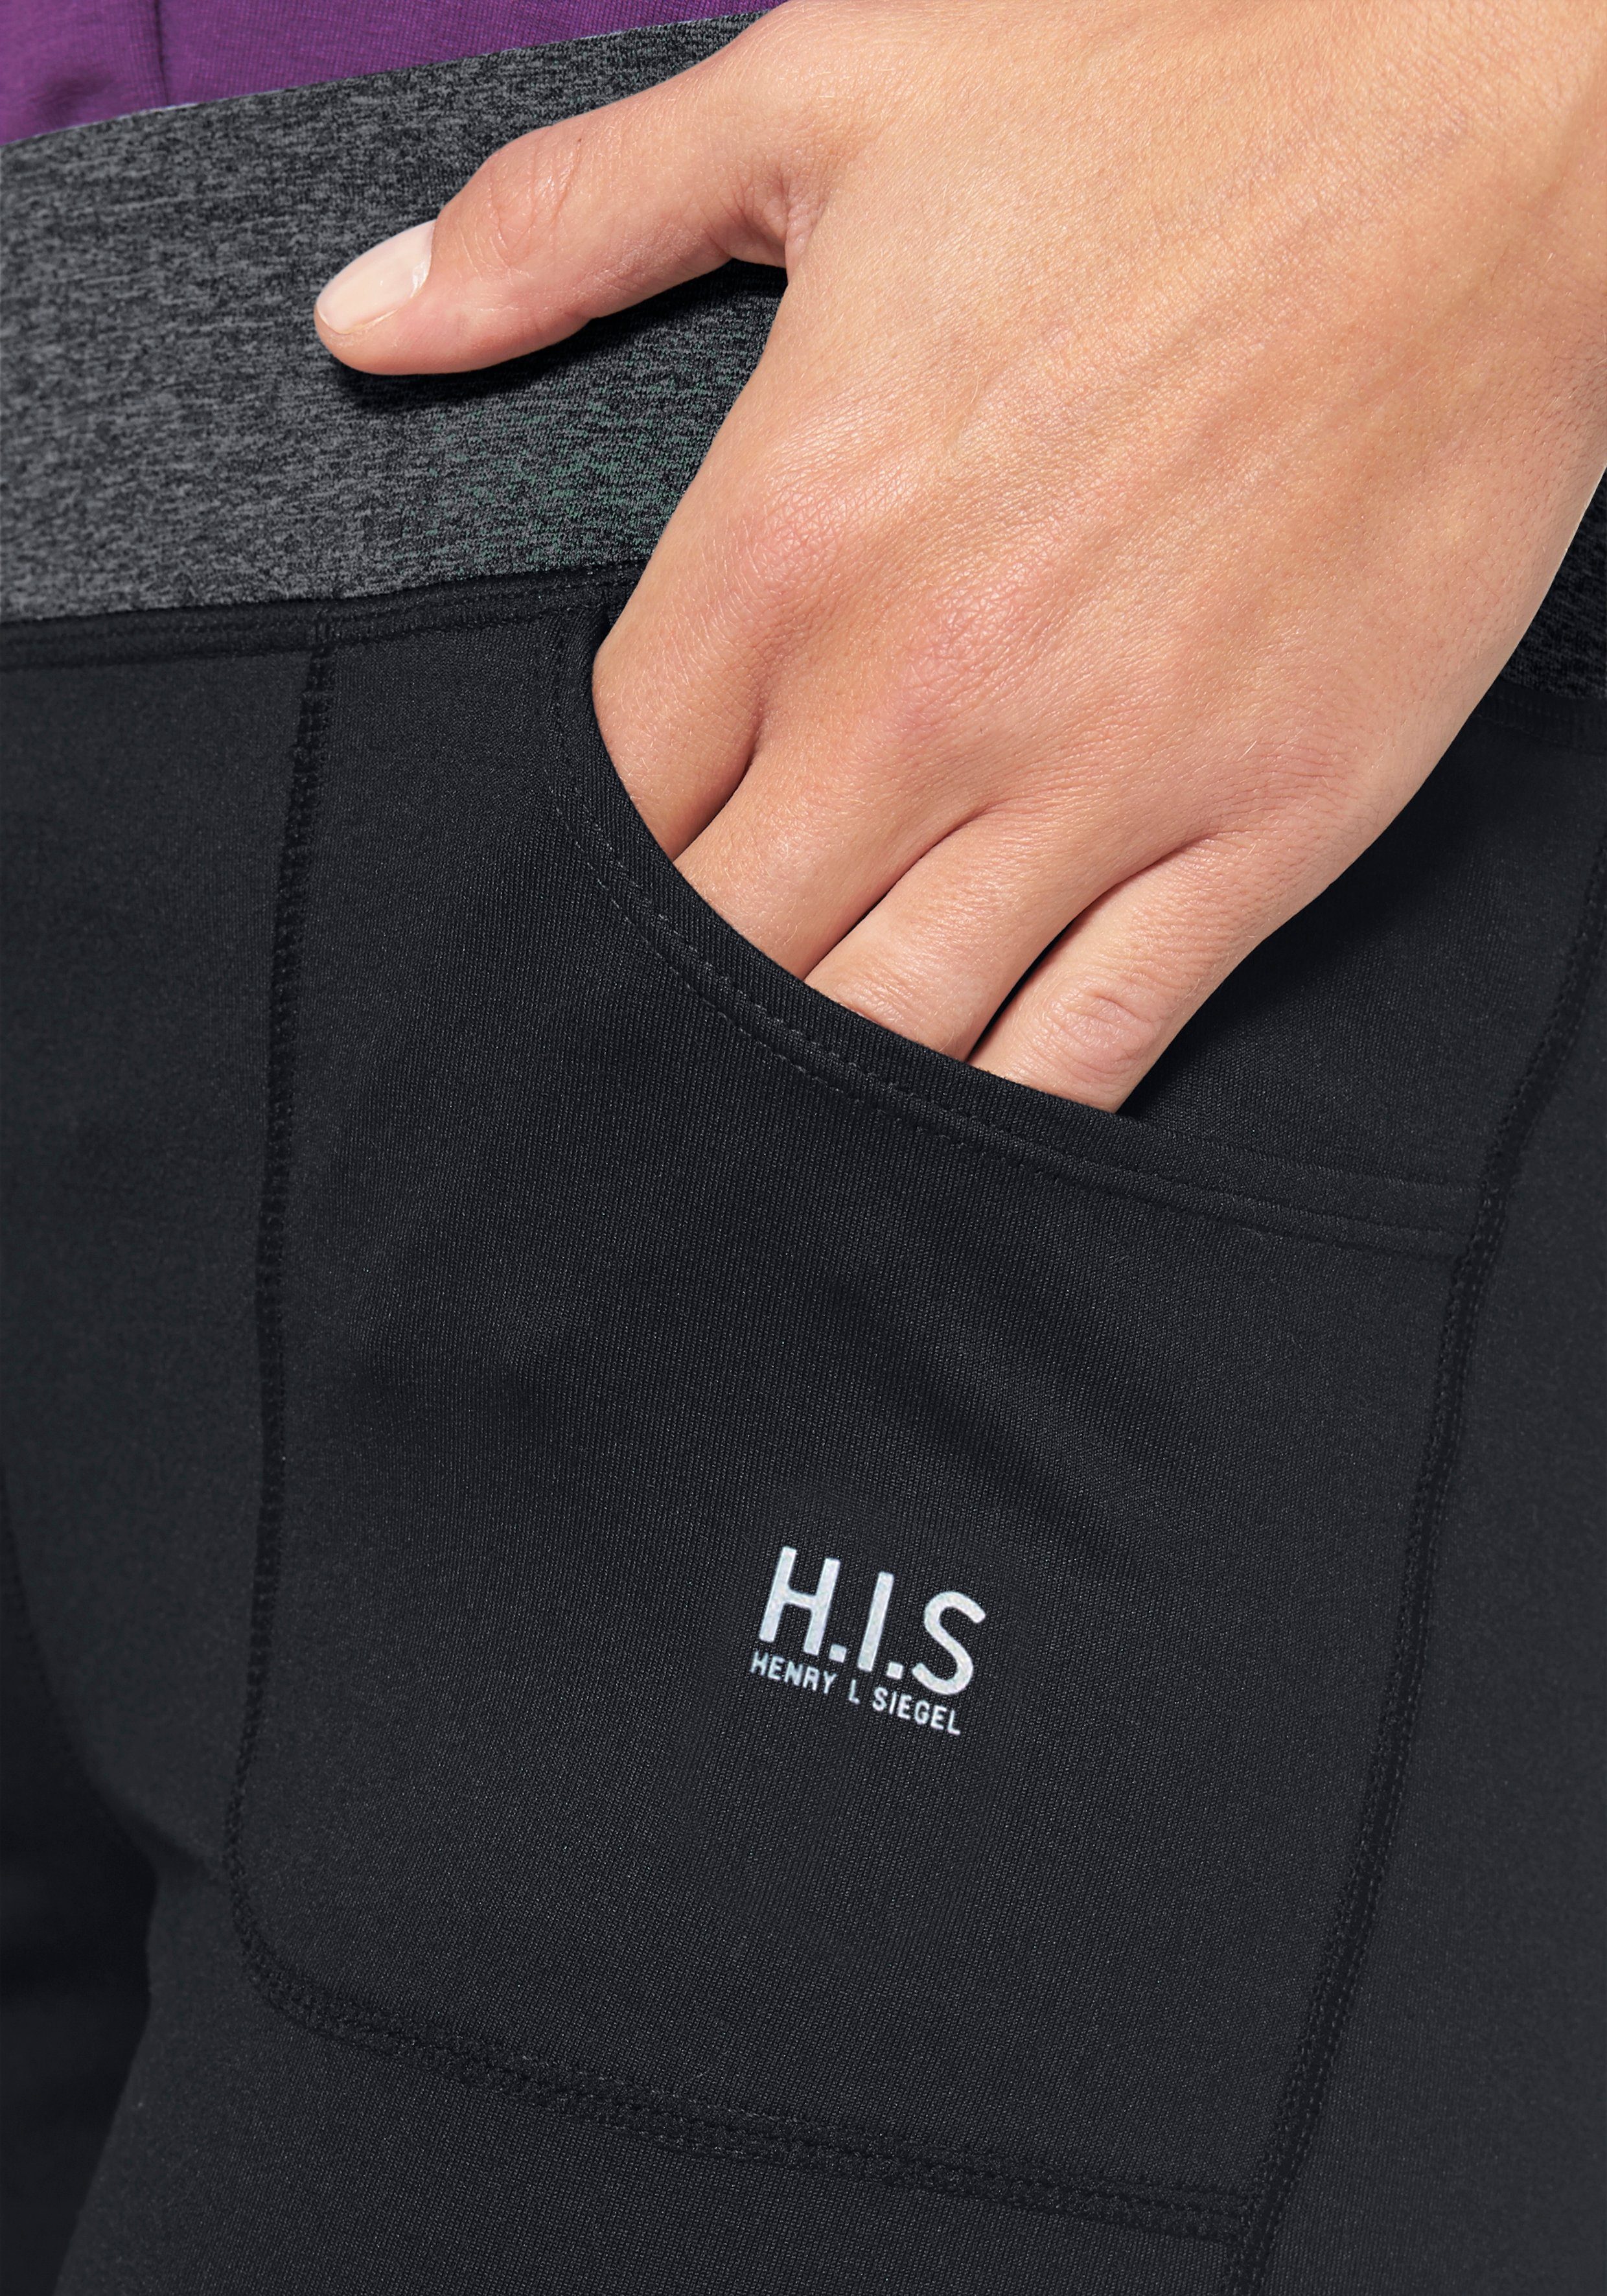 H.I.S Jazzpants aus recyceltem schwarz (Hose Bund Wickeloptik aus Material) nachhaltigem Material mit K+L